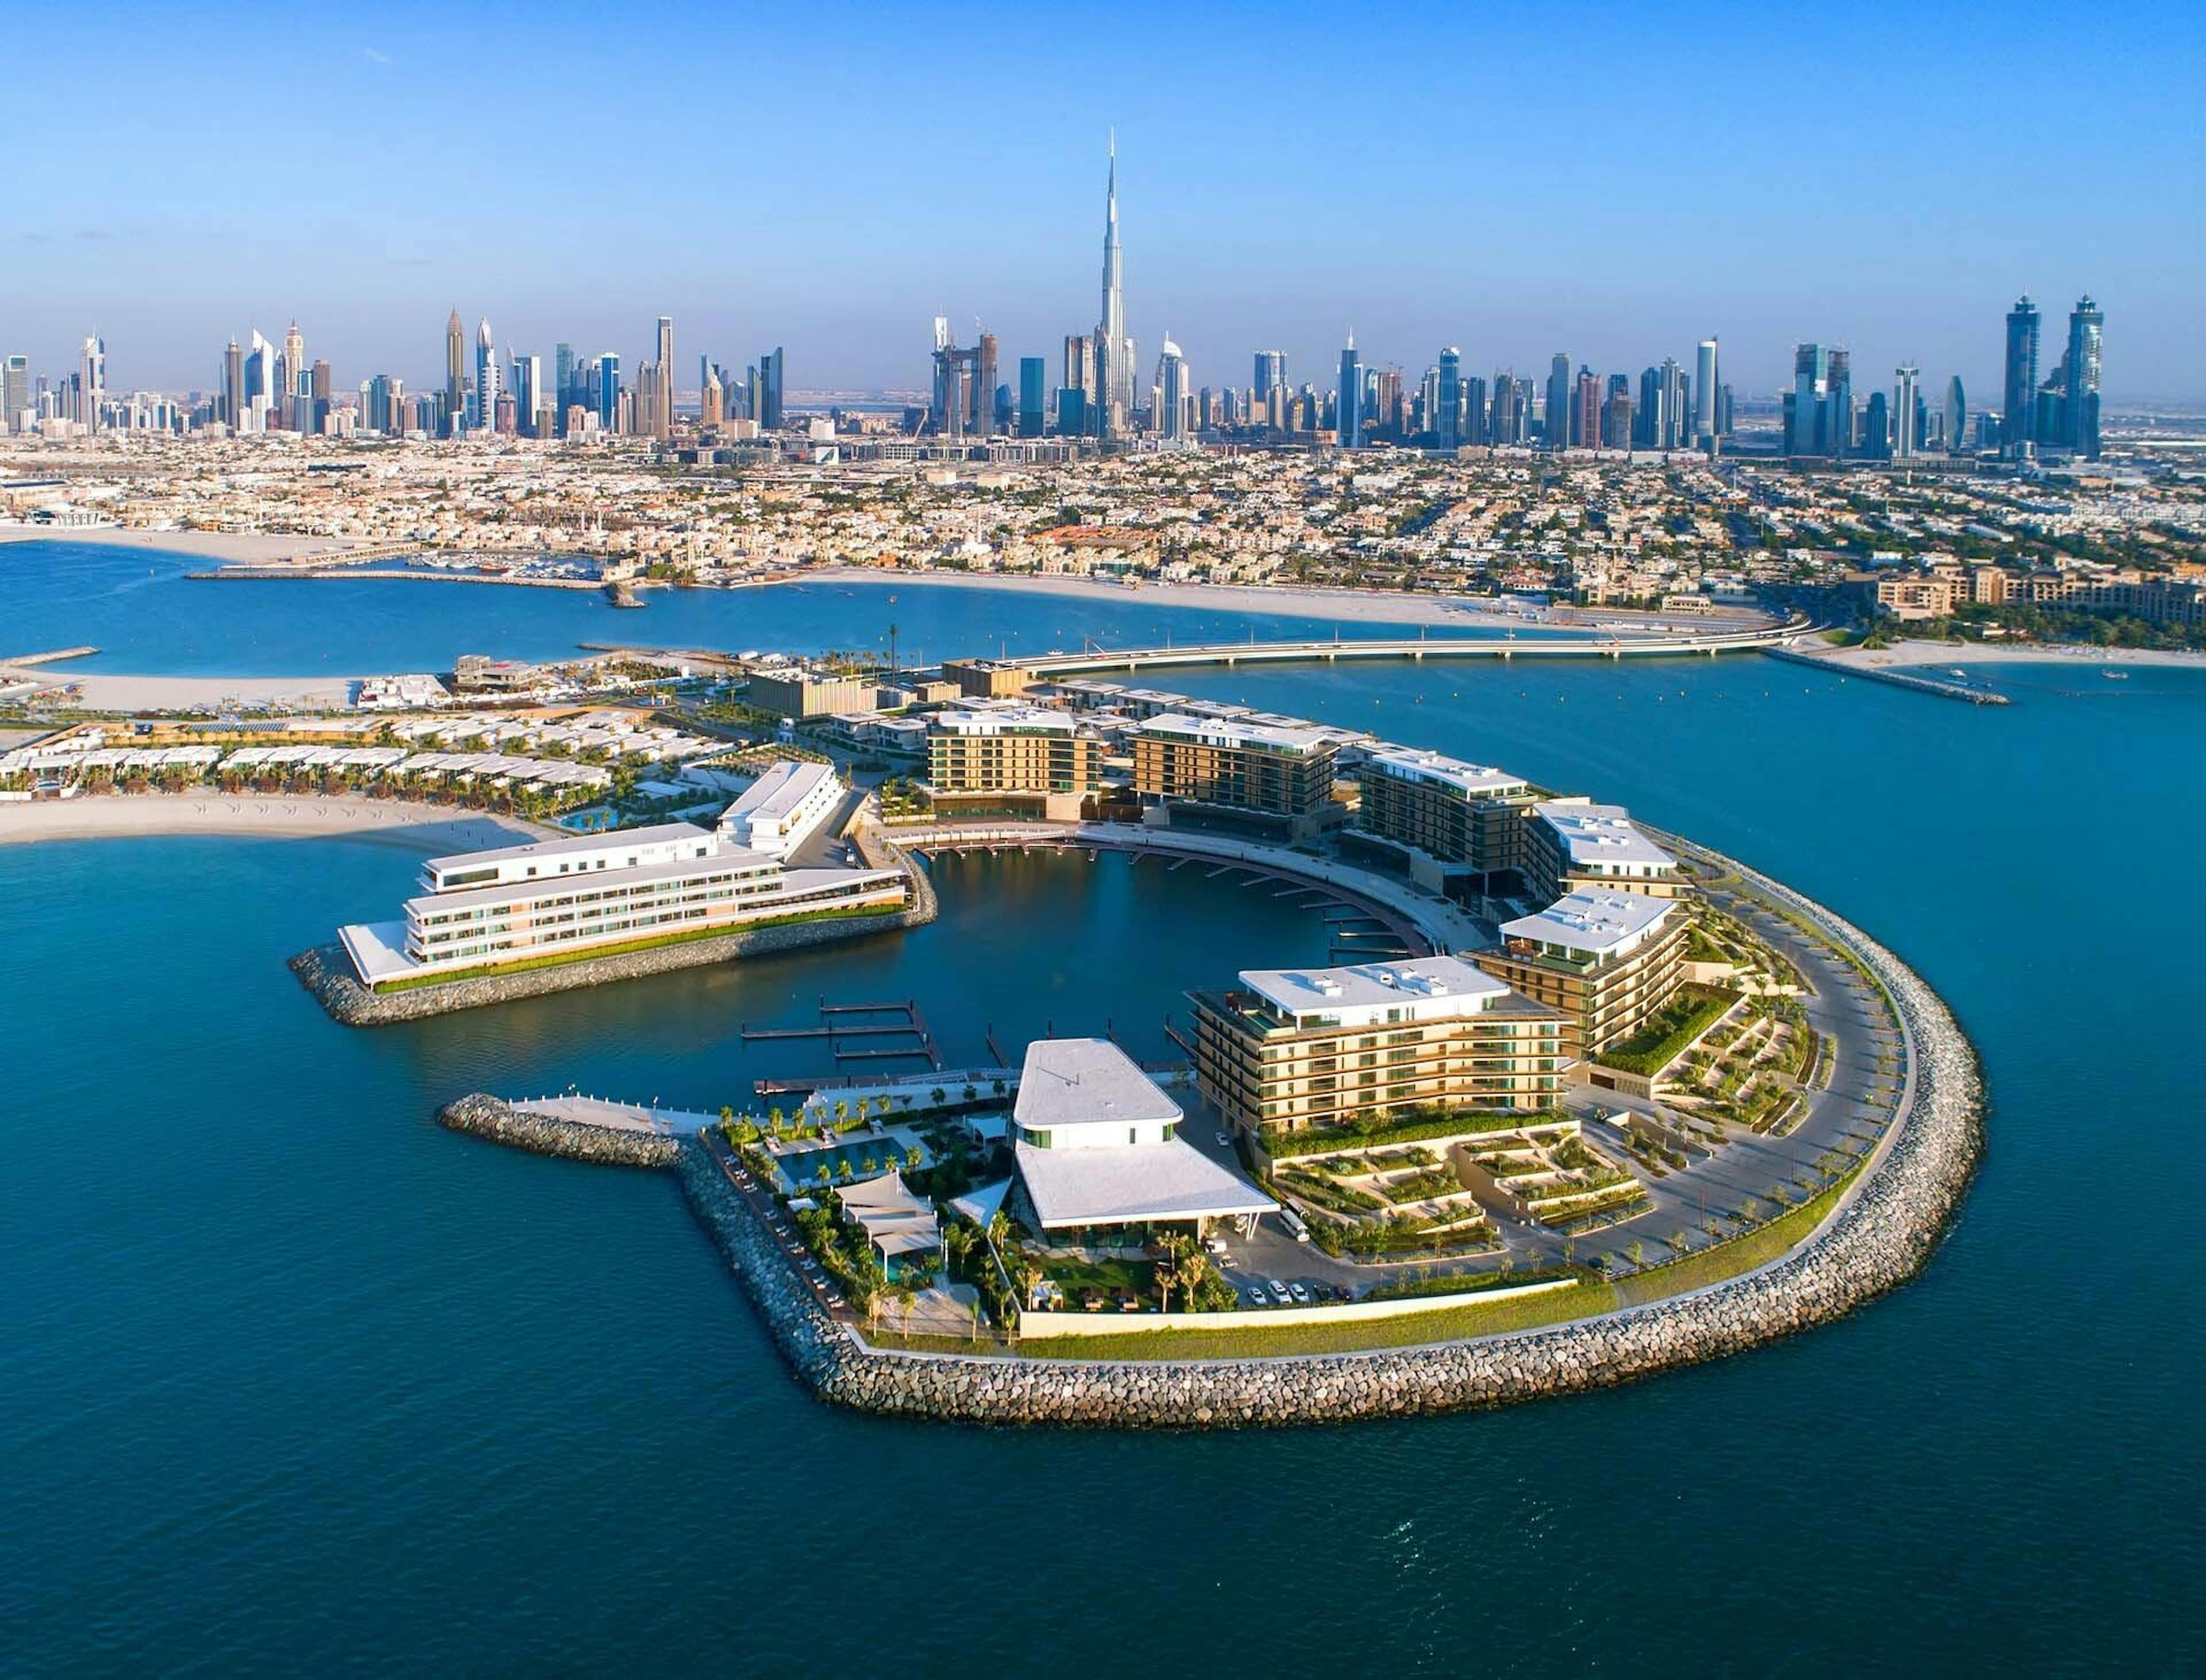 Jumeirah Bay Island Real Estate - Idigov Real Estate